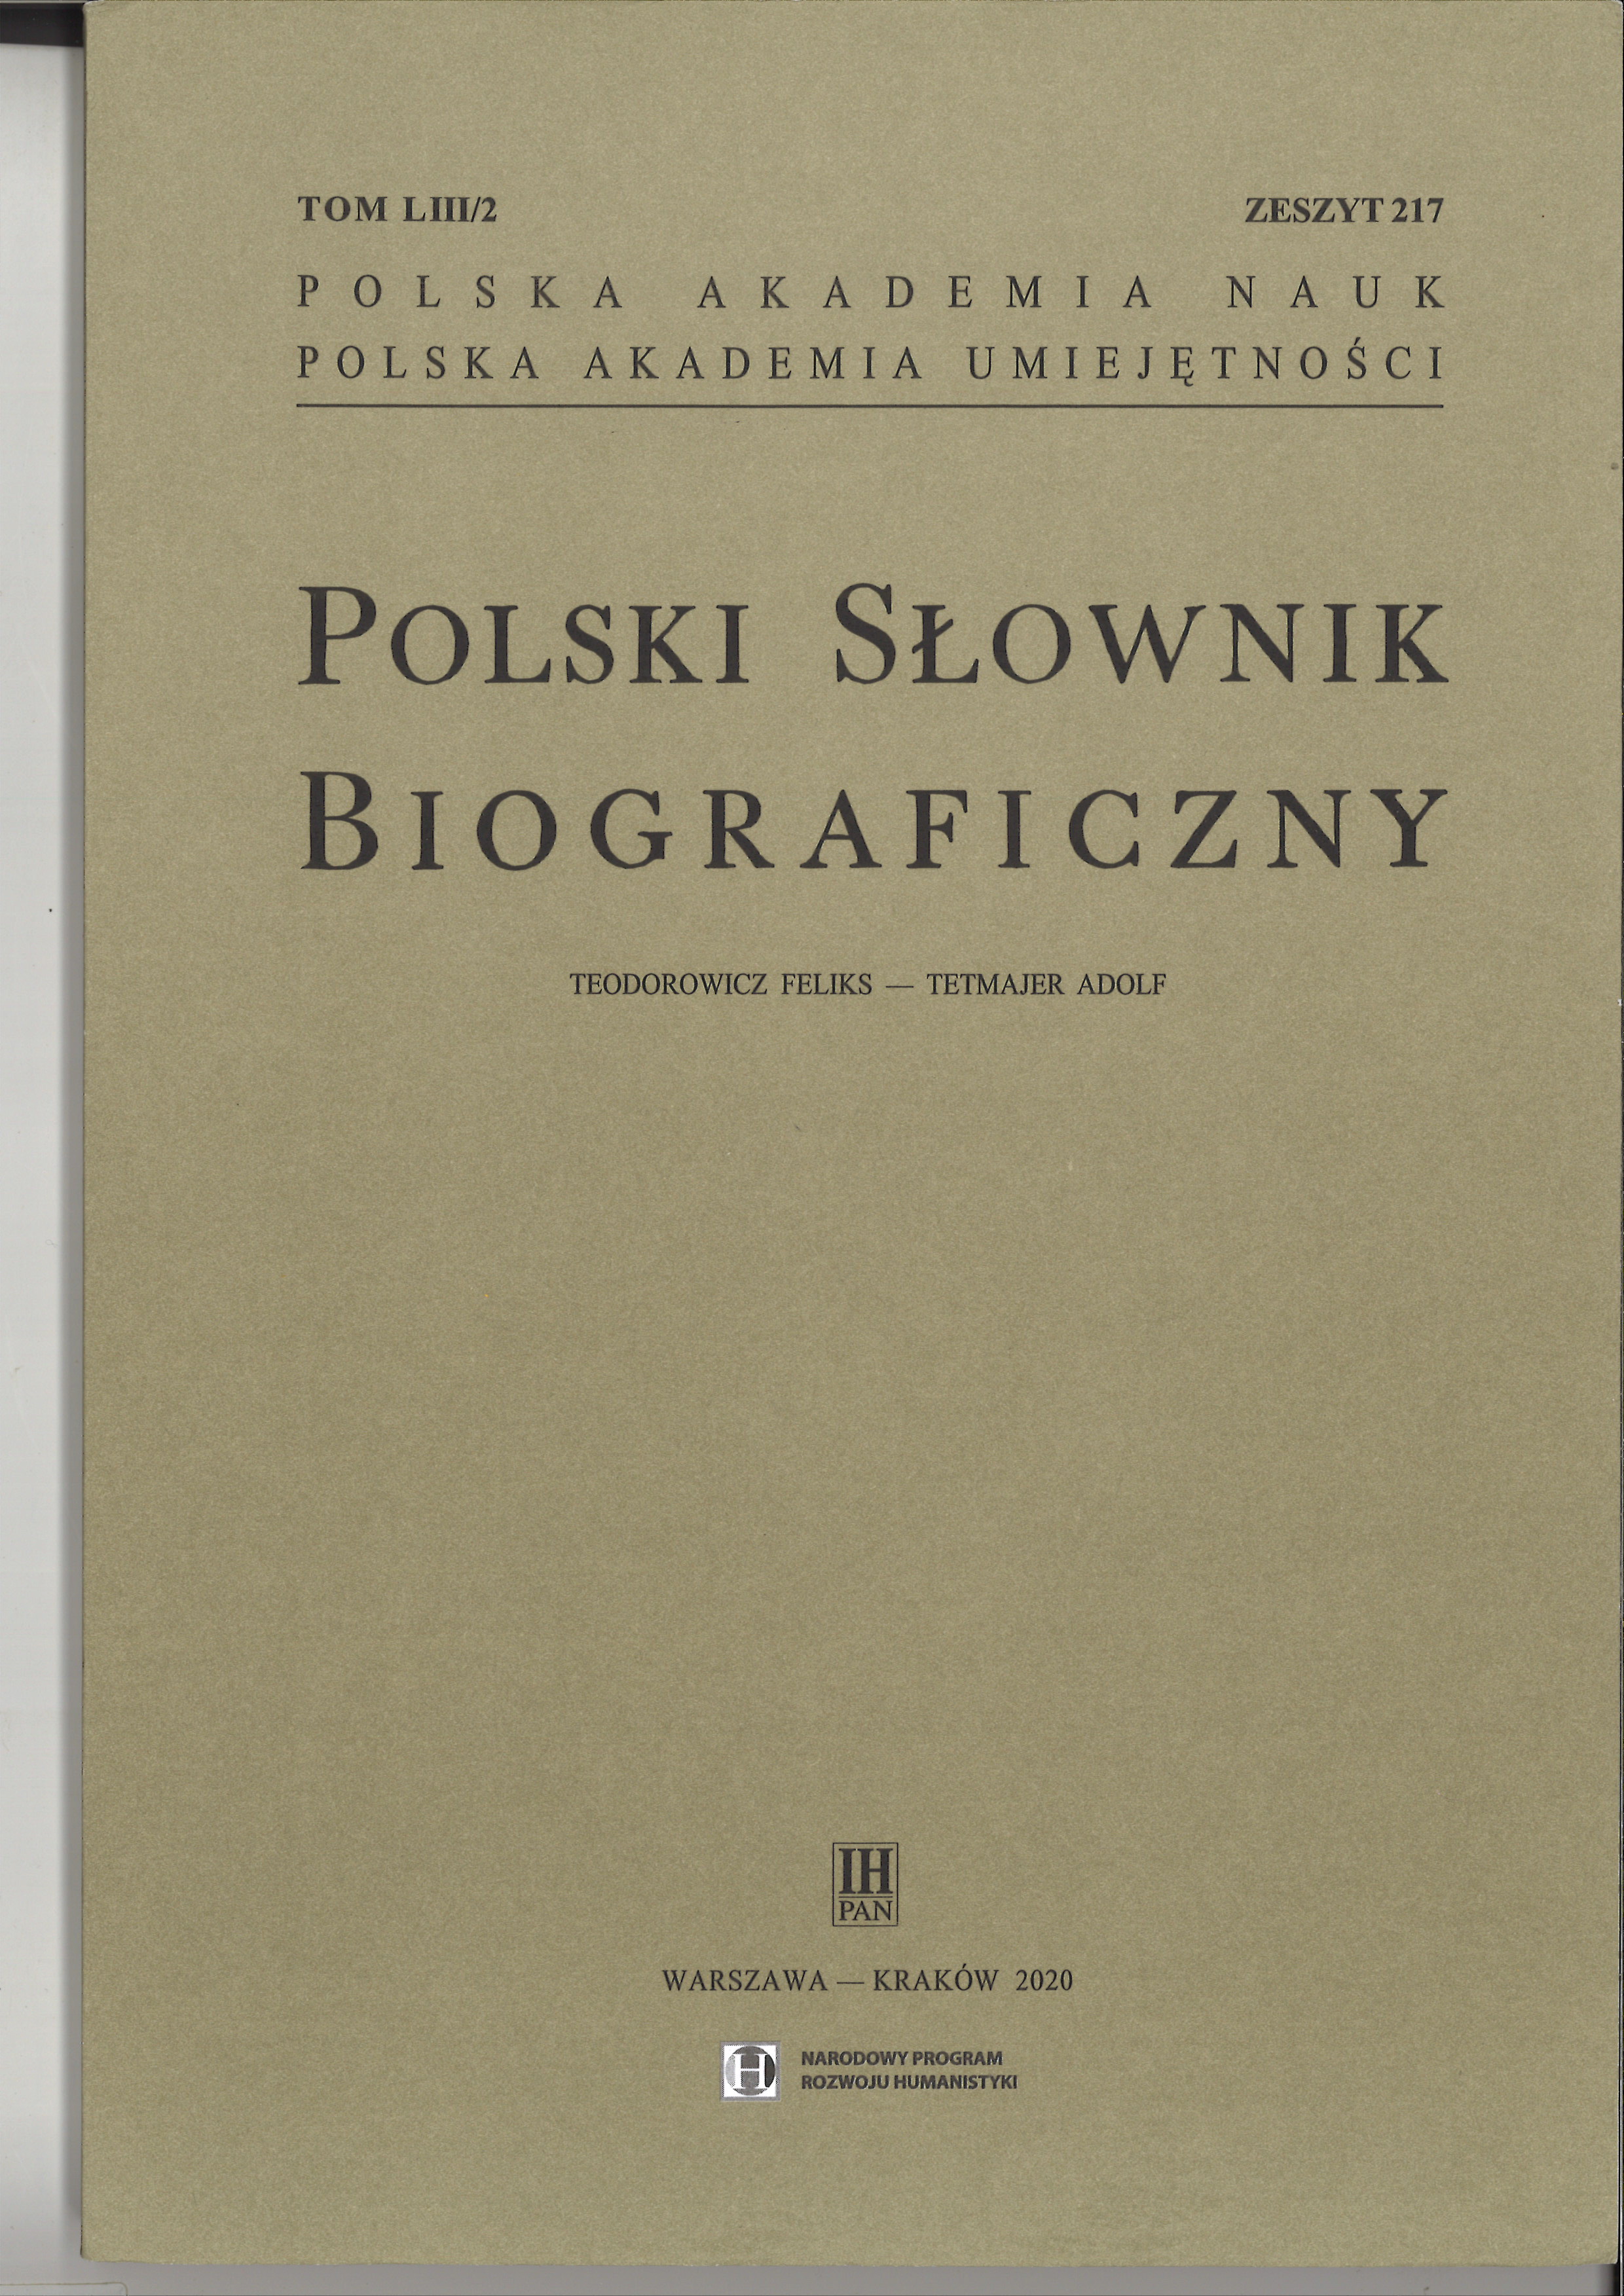 Polski slownik biograficzny. Vol 53/4 - Various Authors